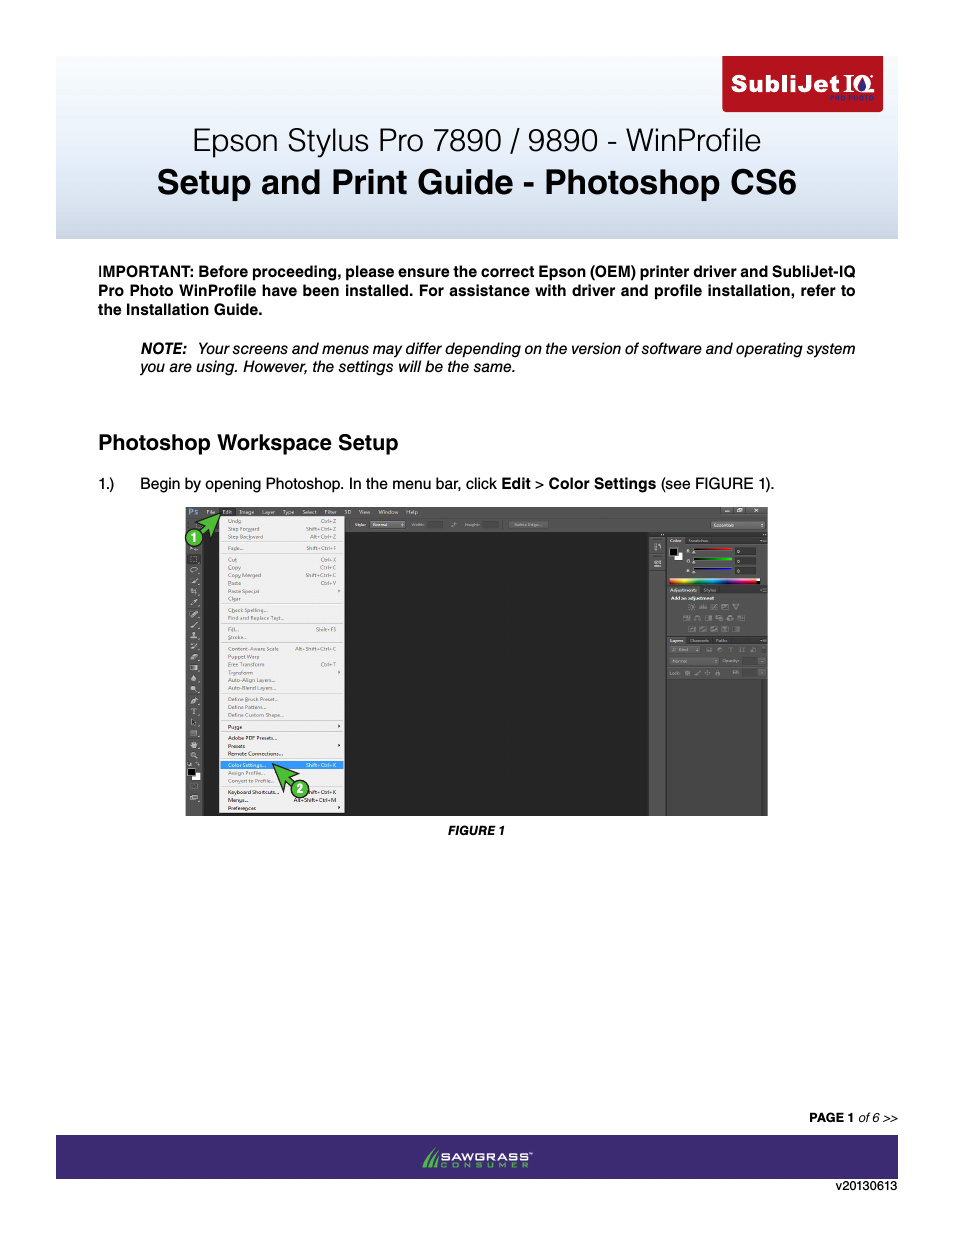 SubliJet IQ Epson Stylus Pro 9890 - IQ Pro Photo (Windows ICC Profile Setup): Print & Setup Guide Photoshop CS6